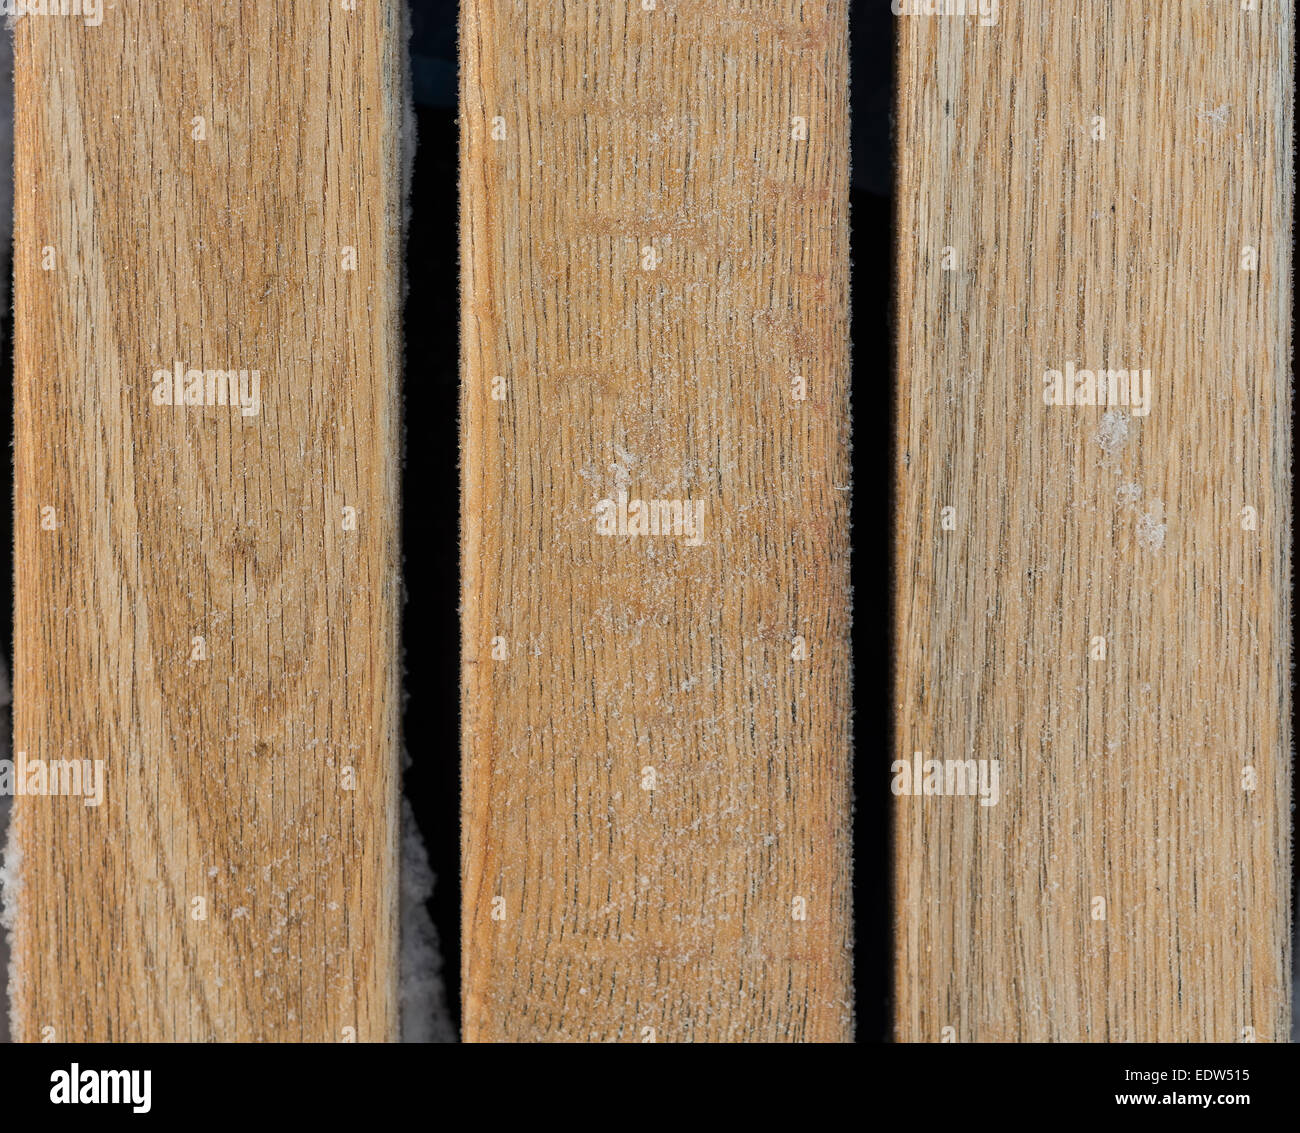 Frozen wooden oak lath background Stock Photo